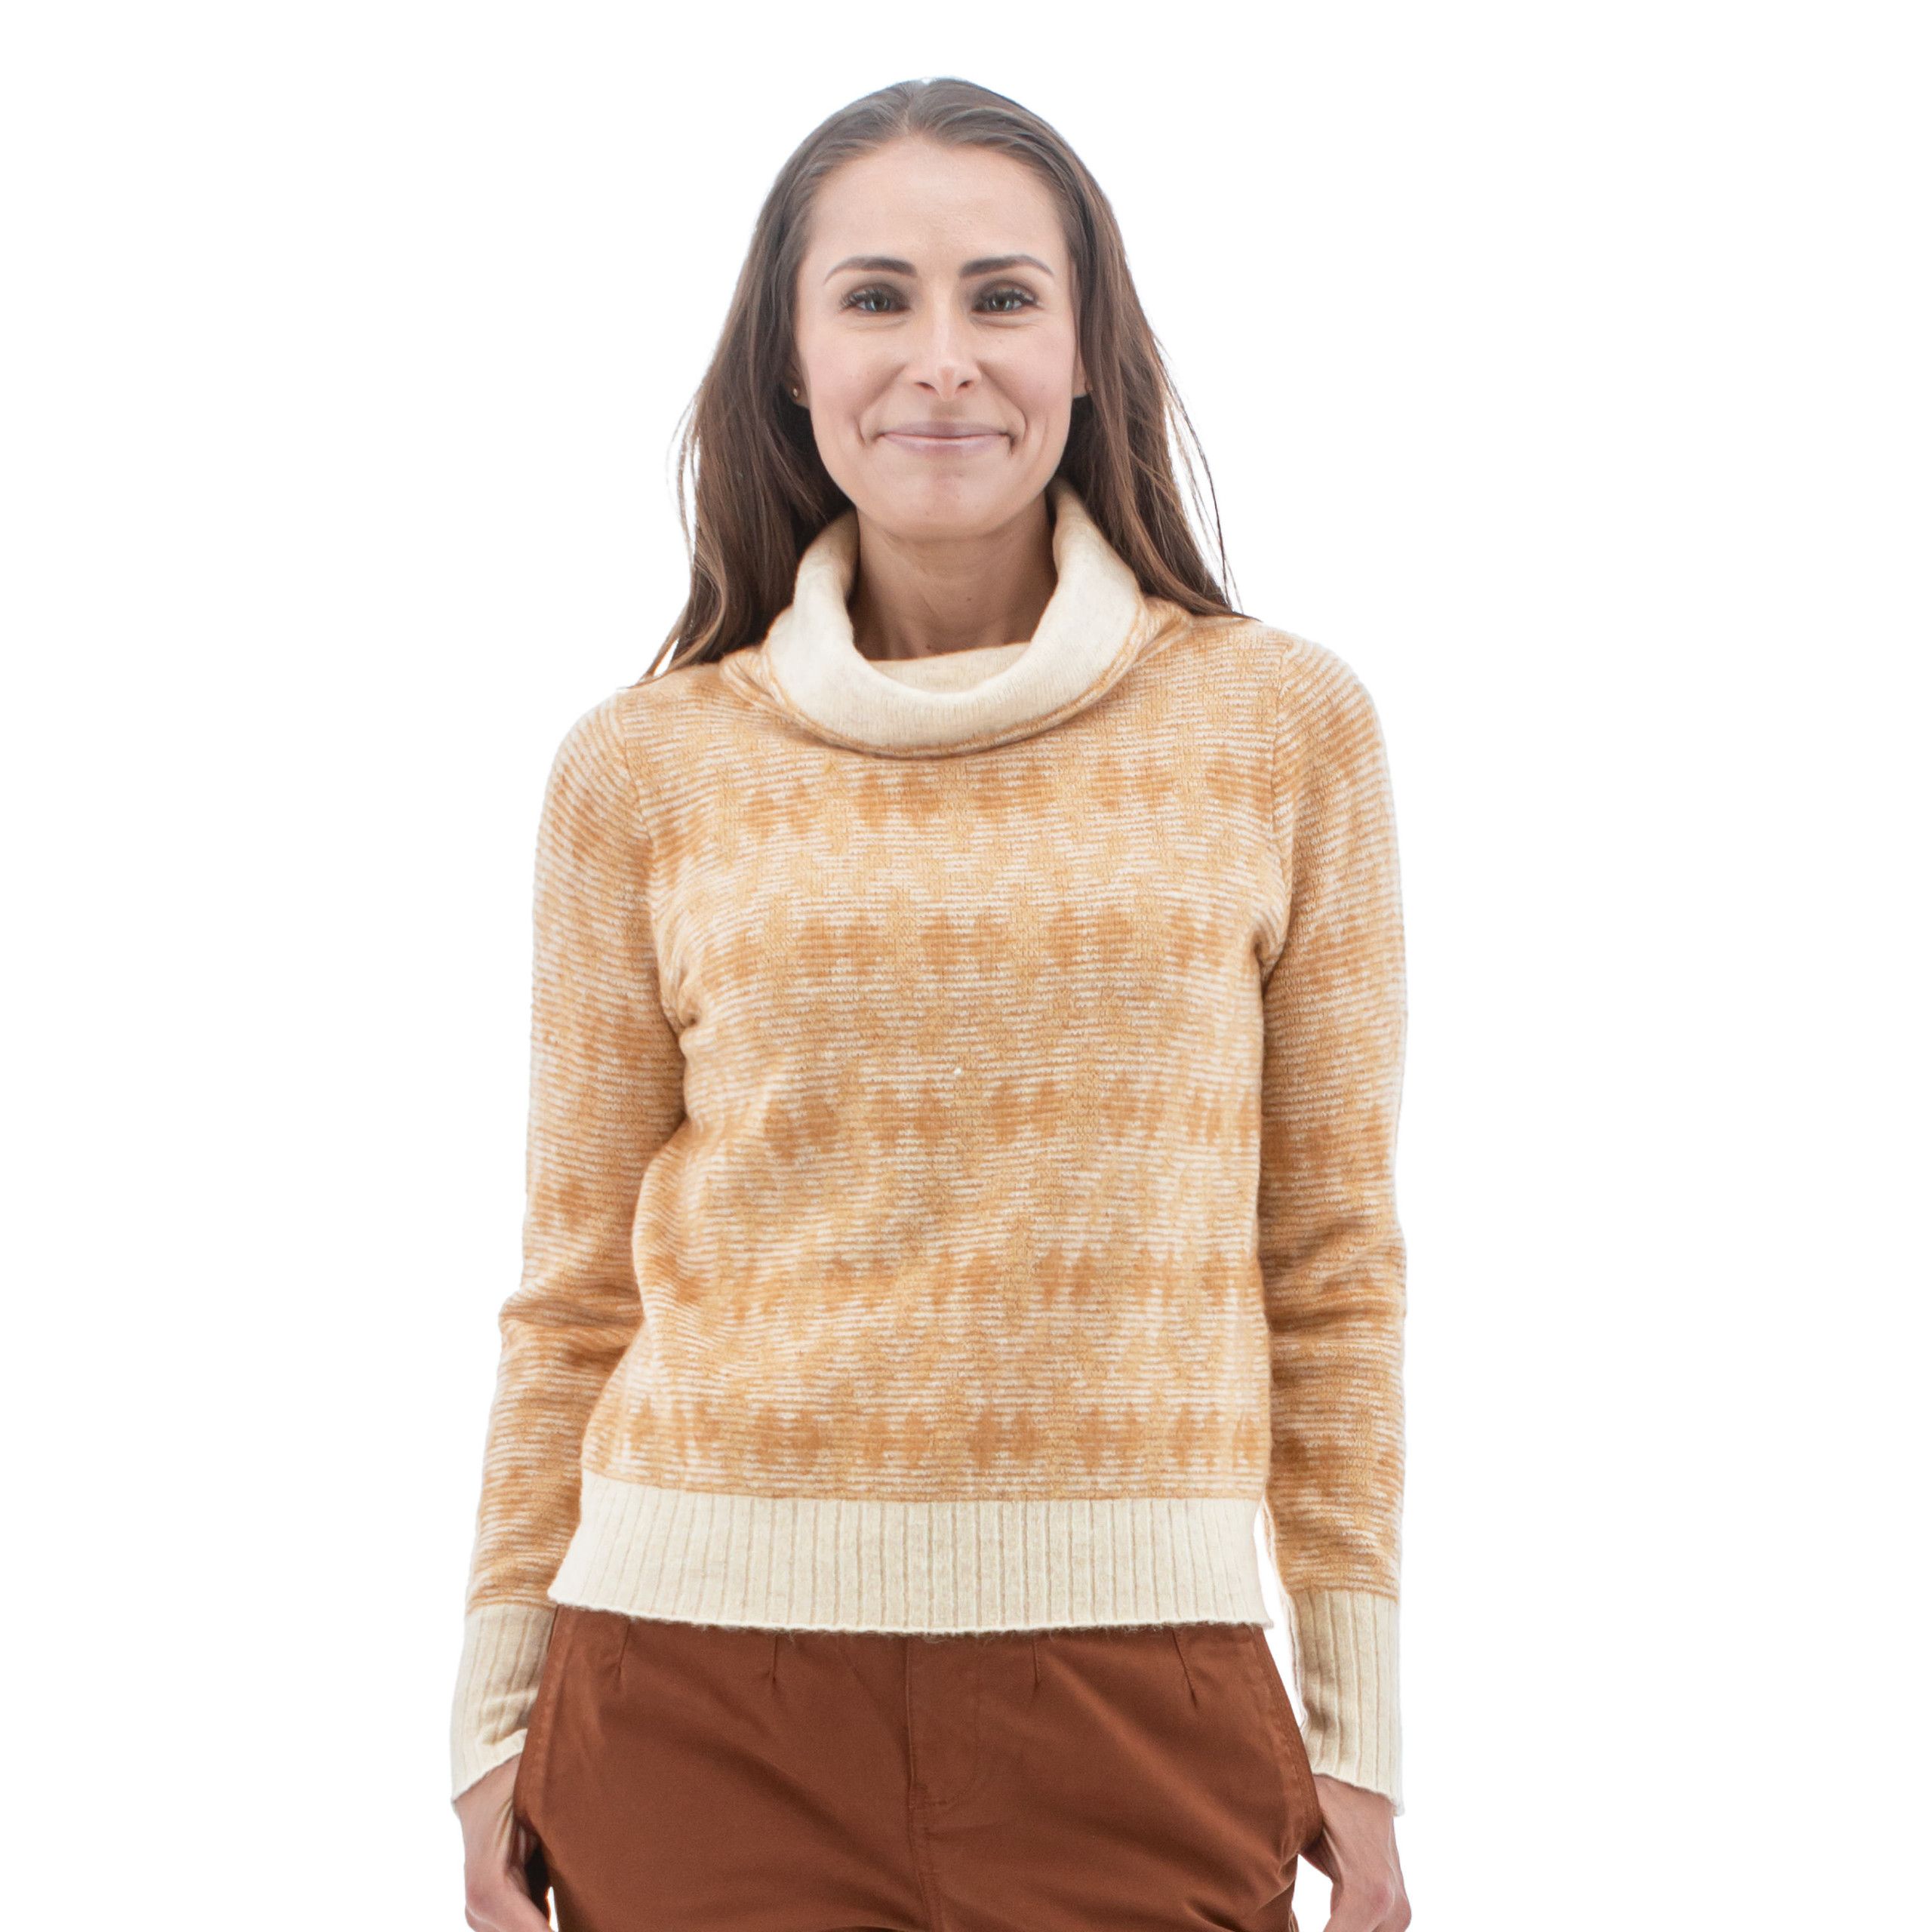 Paragon Sweater | Aventura Clothing